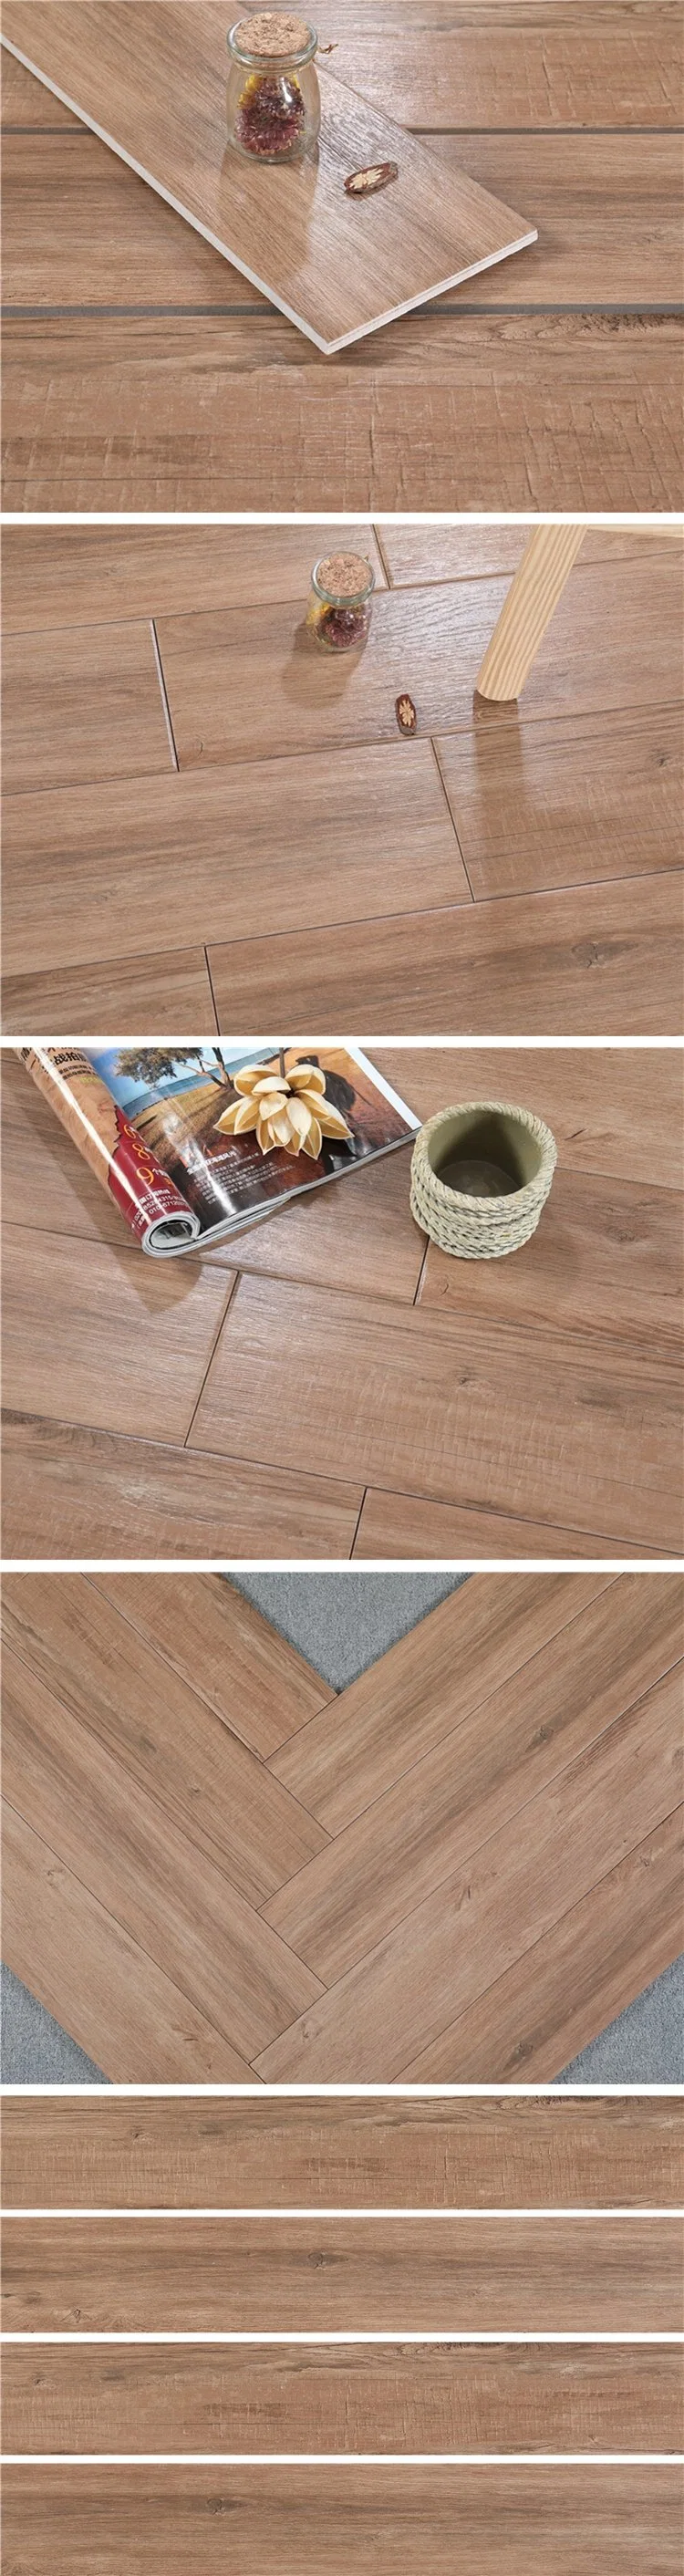 Hot Sale Commercial Use Hone Finished Ceramic Tile Wood Floor